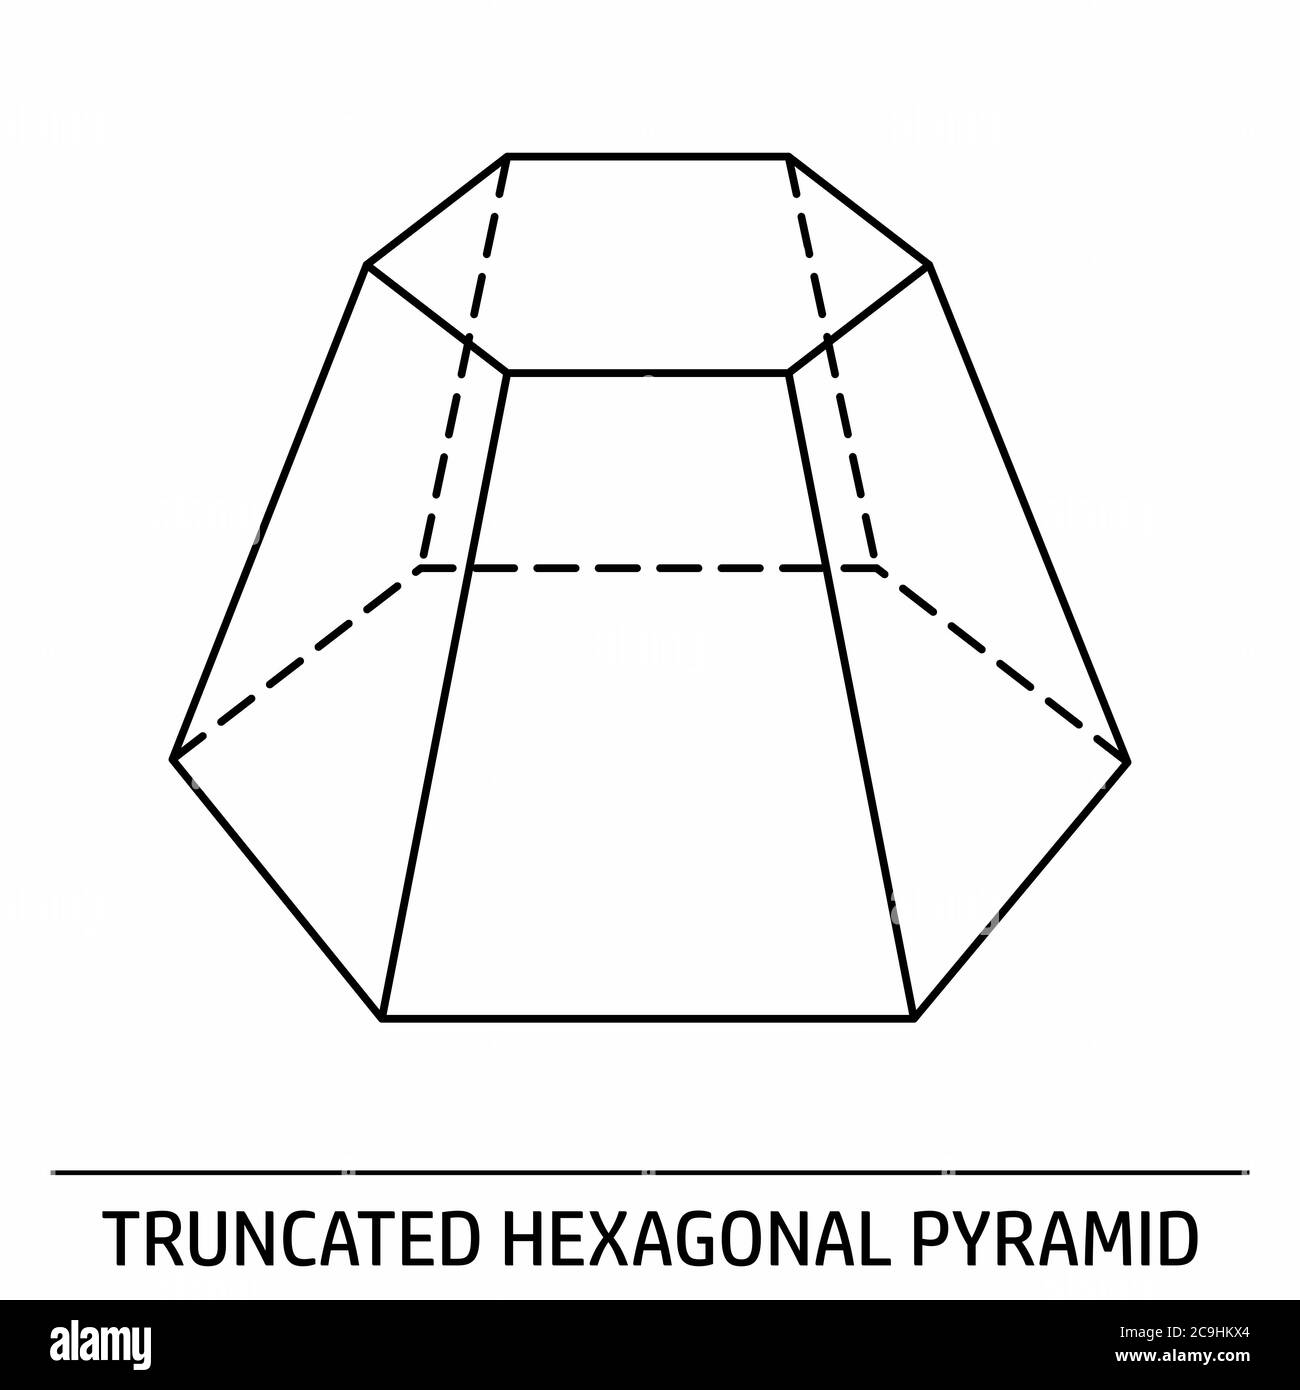 Truncated Hexagonal Pyramid Stock Vector